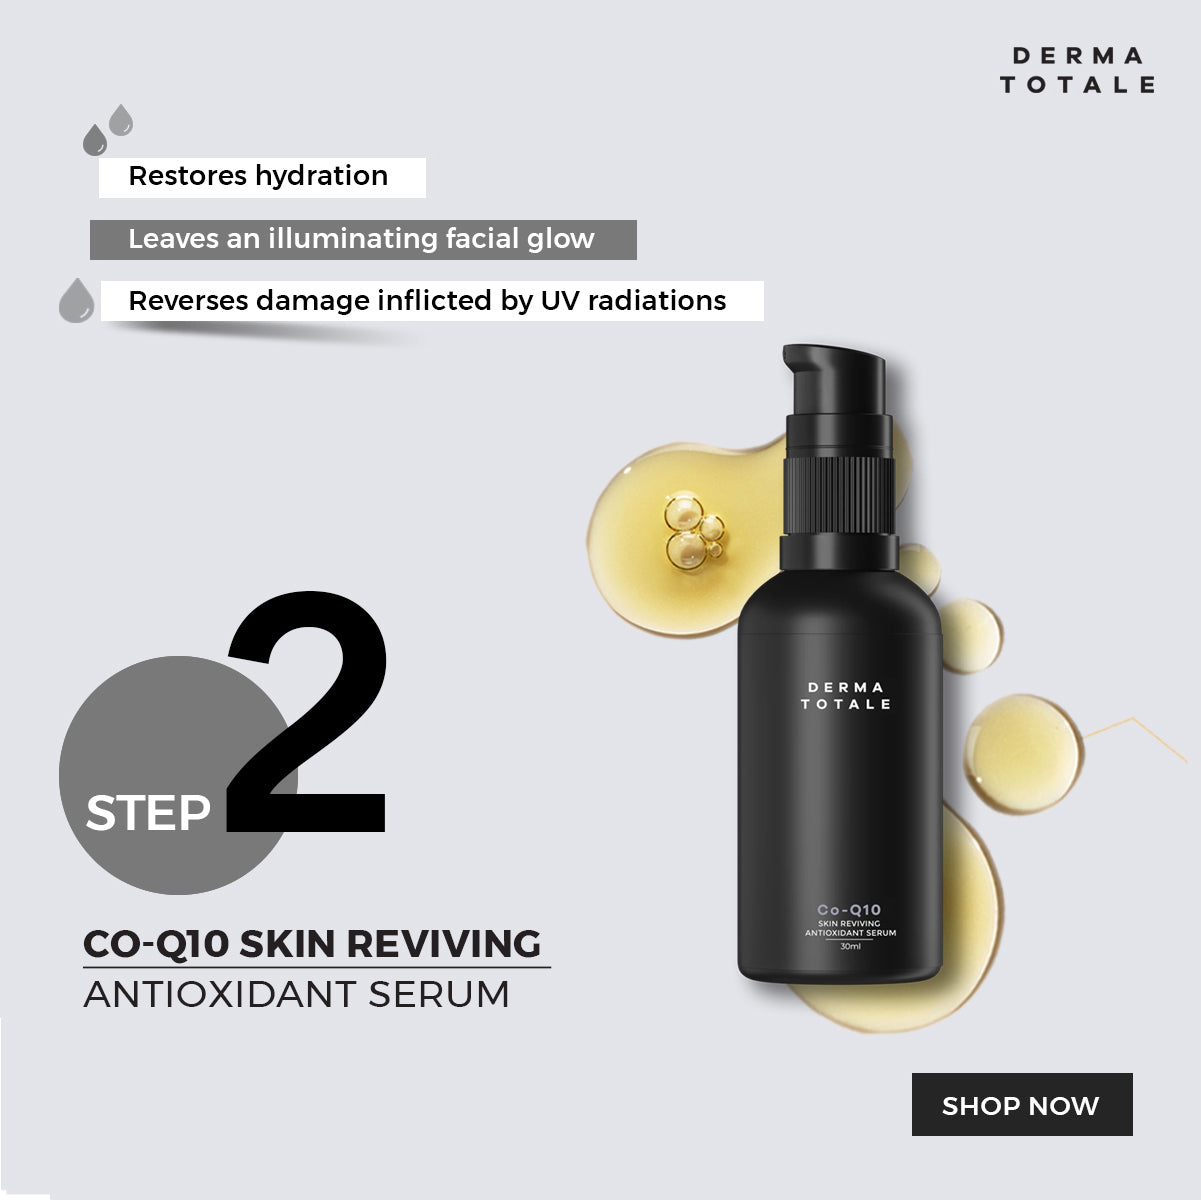 Step 2 - CO-Q10 Skin Reviving serum